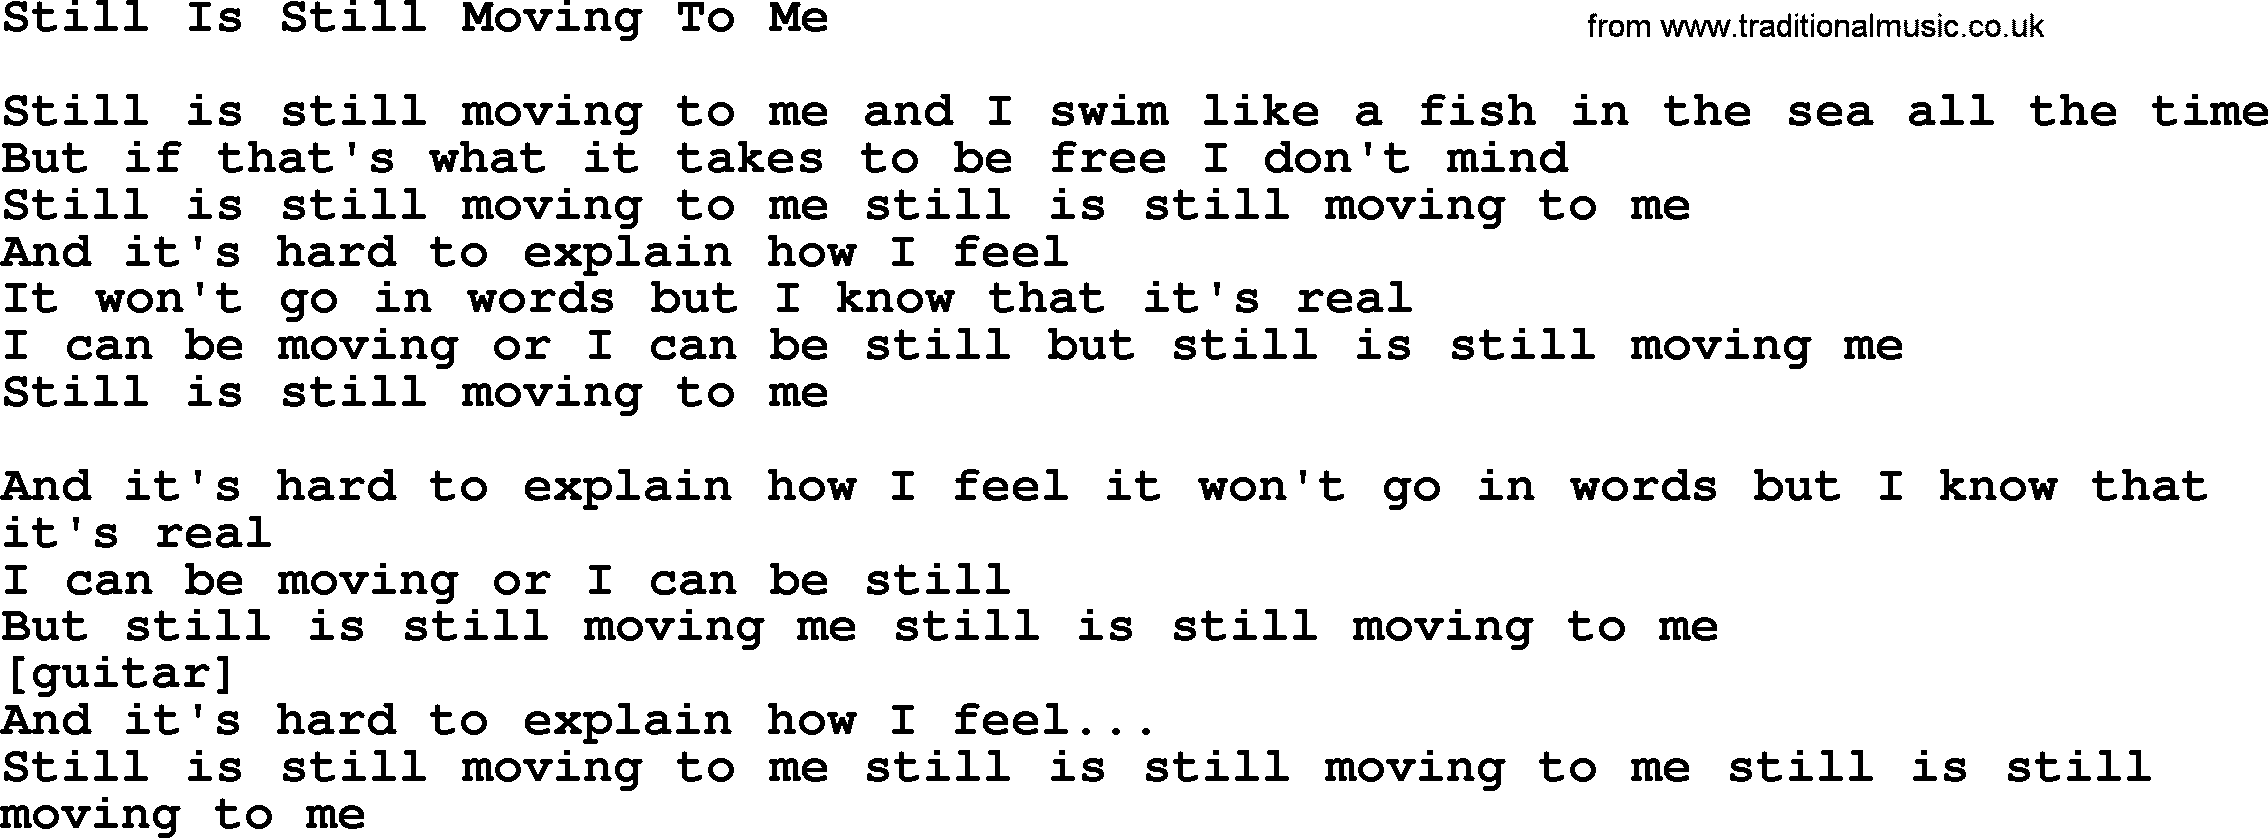 Willie Nelson song: Still Is Still Moving To Me lyrics